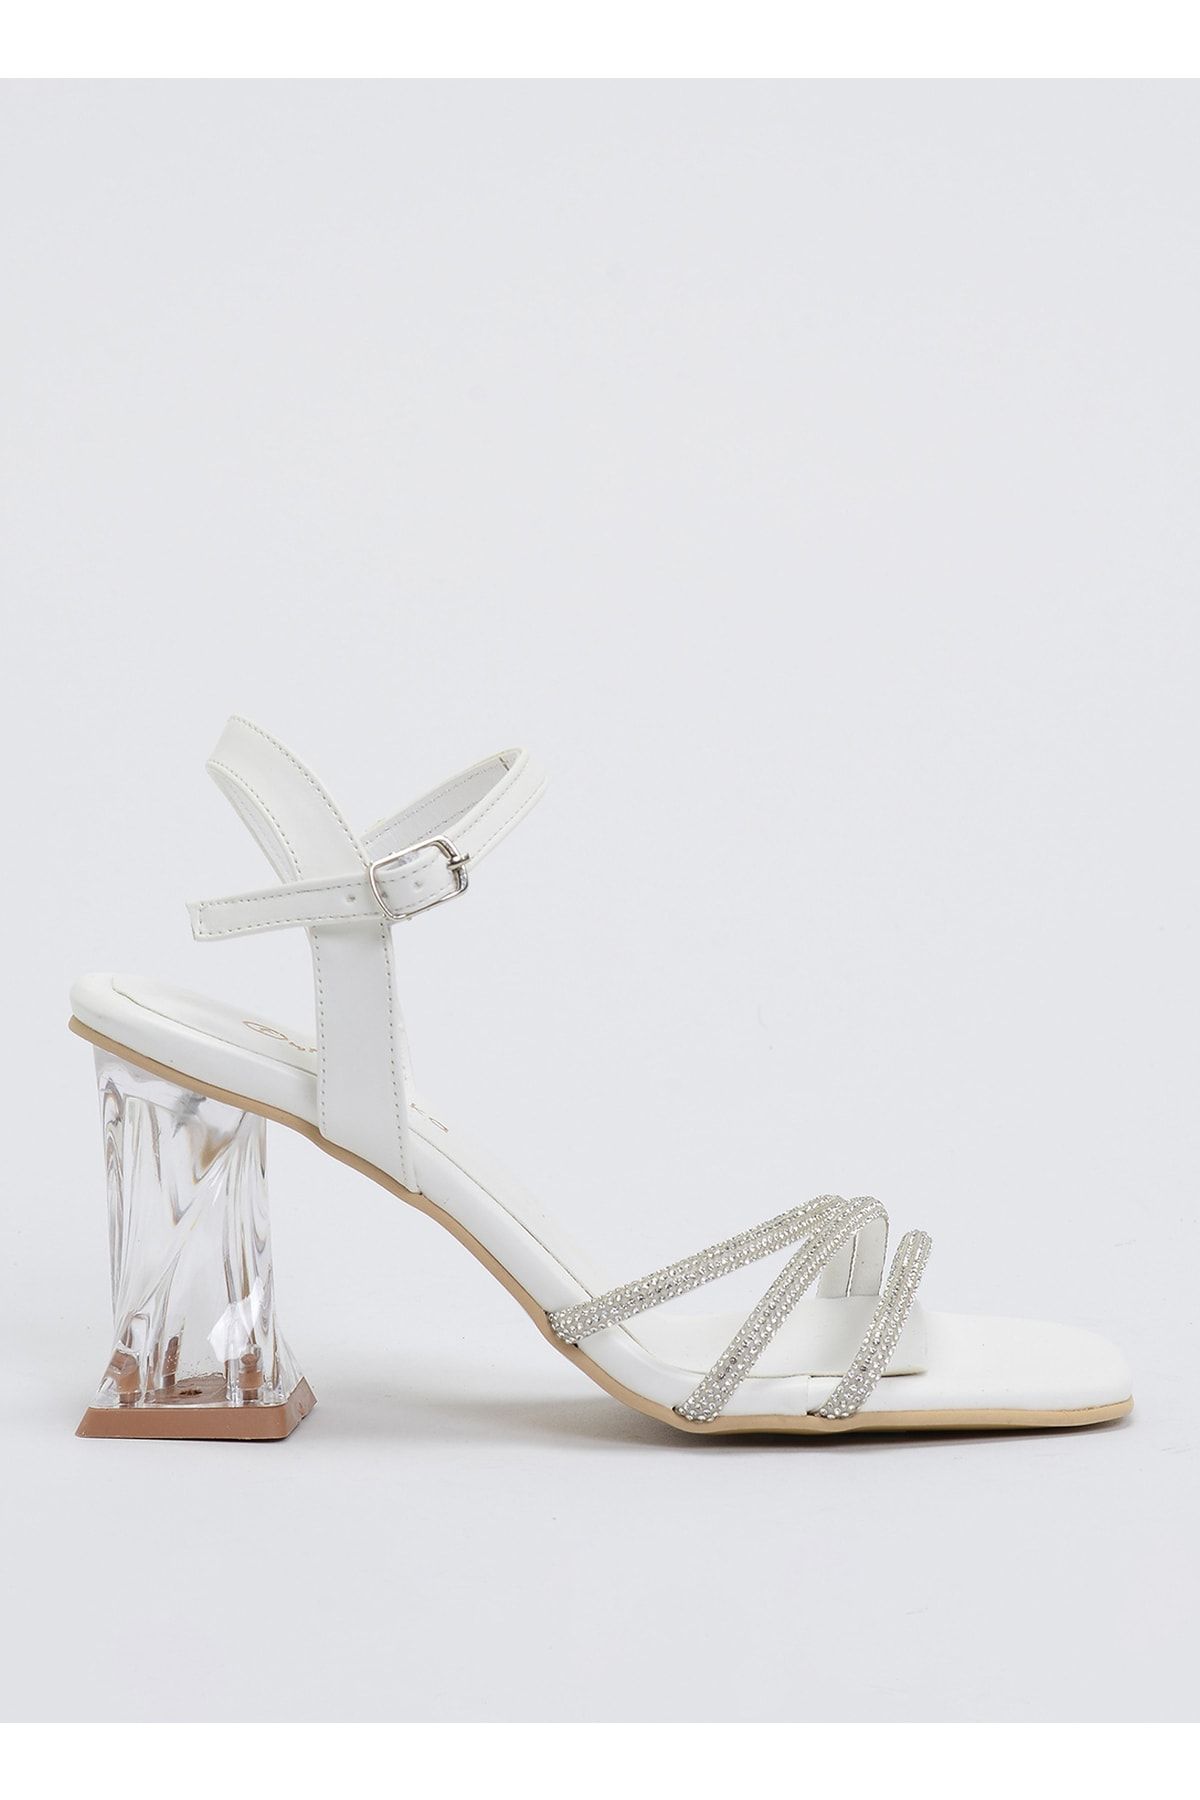 F By Fabrika Beyaz Kadın Topuklu Sandalet Herkabe